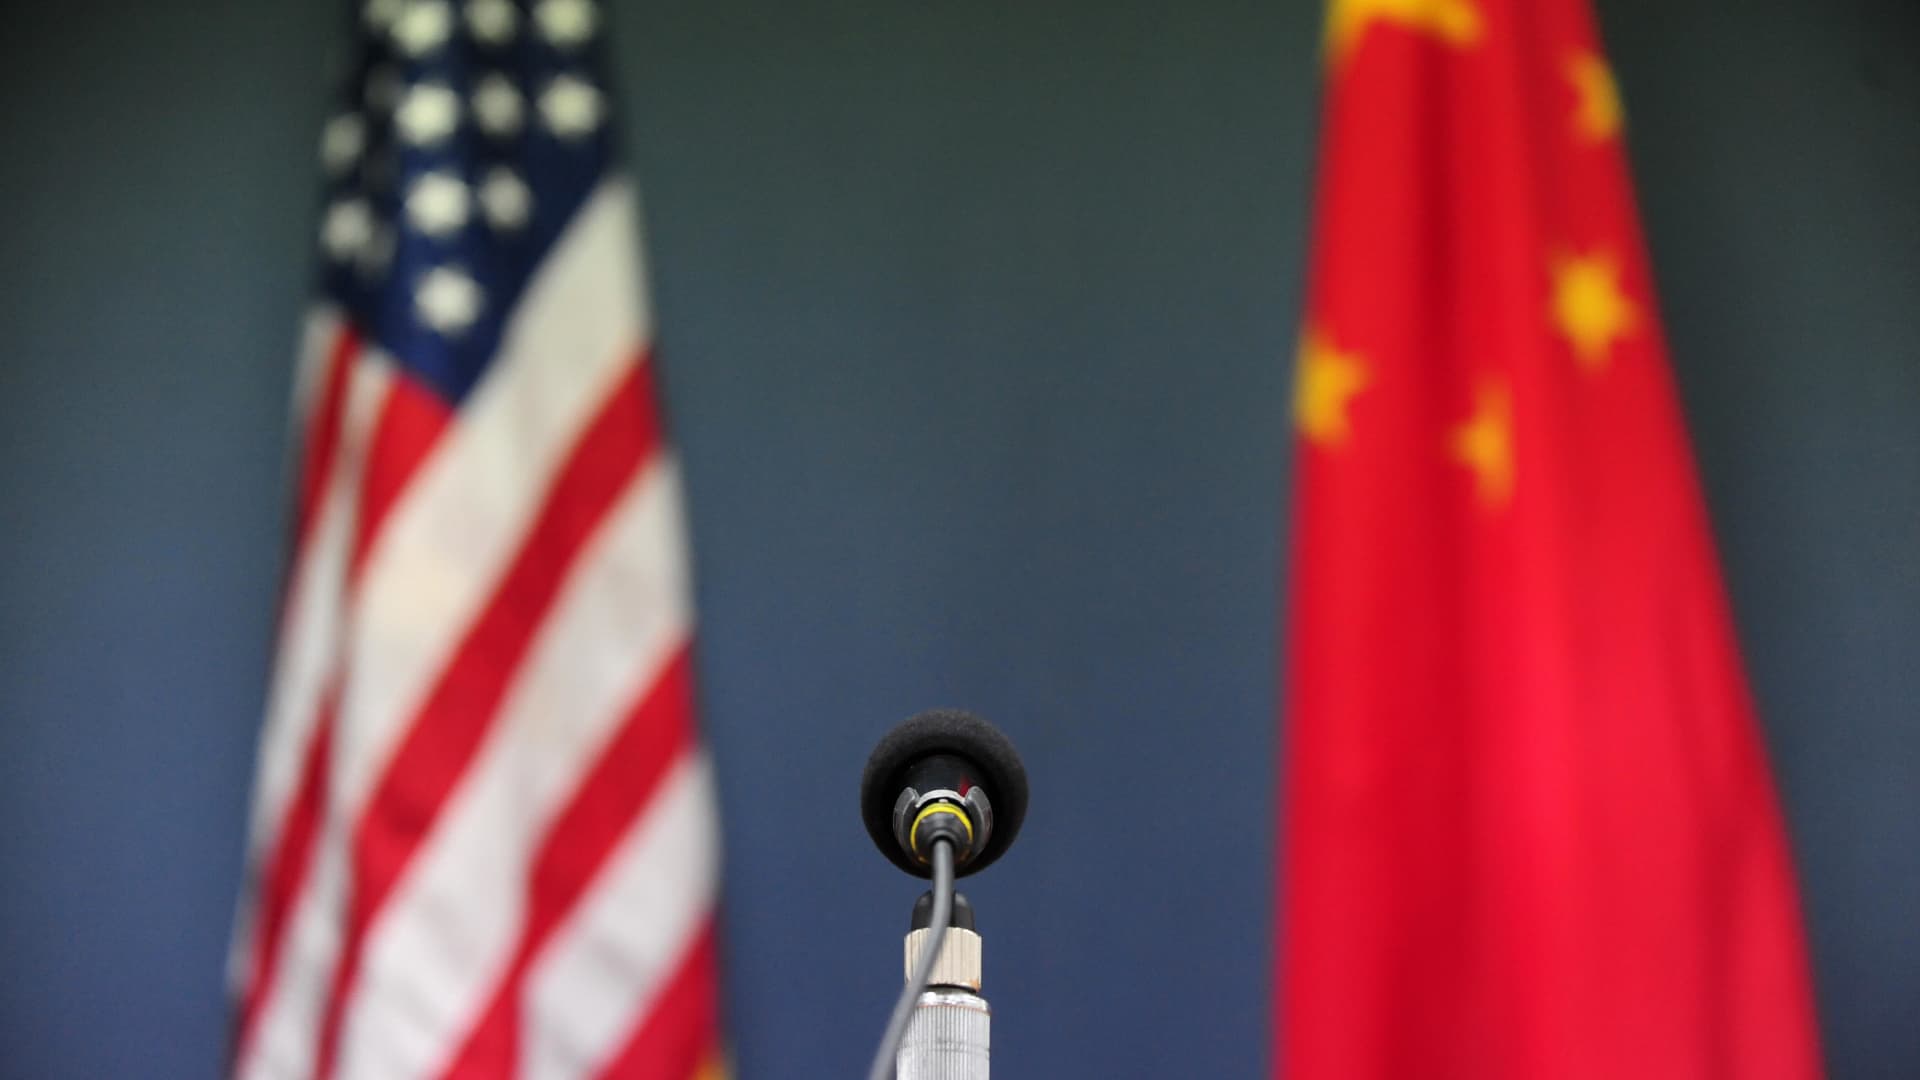 U.S., China's top commerce officials meet to discuss trade concerns